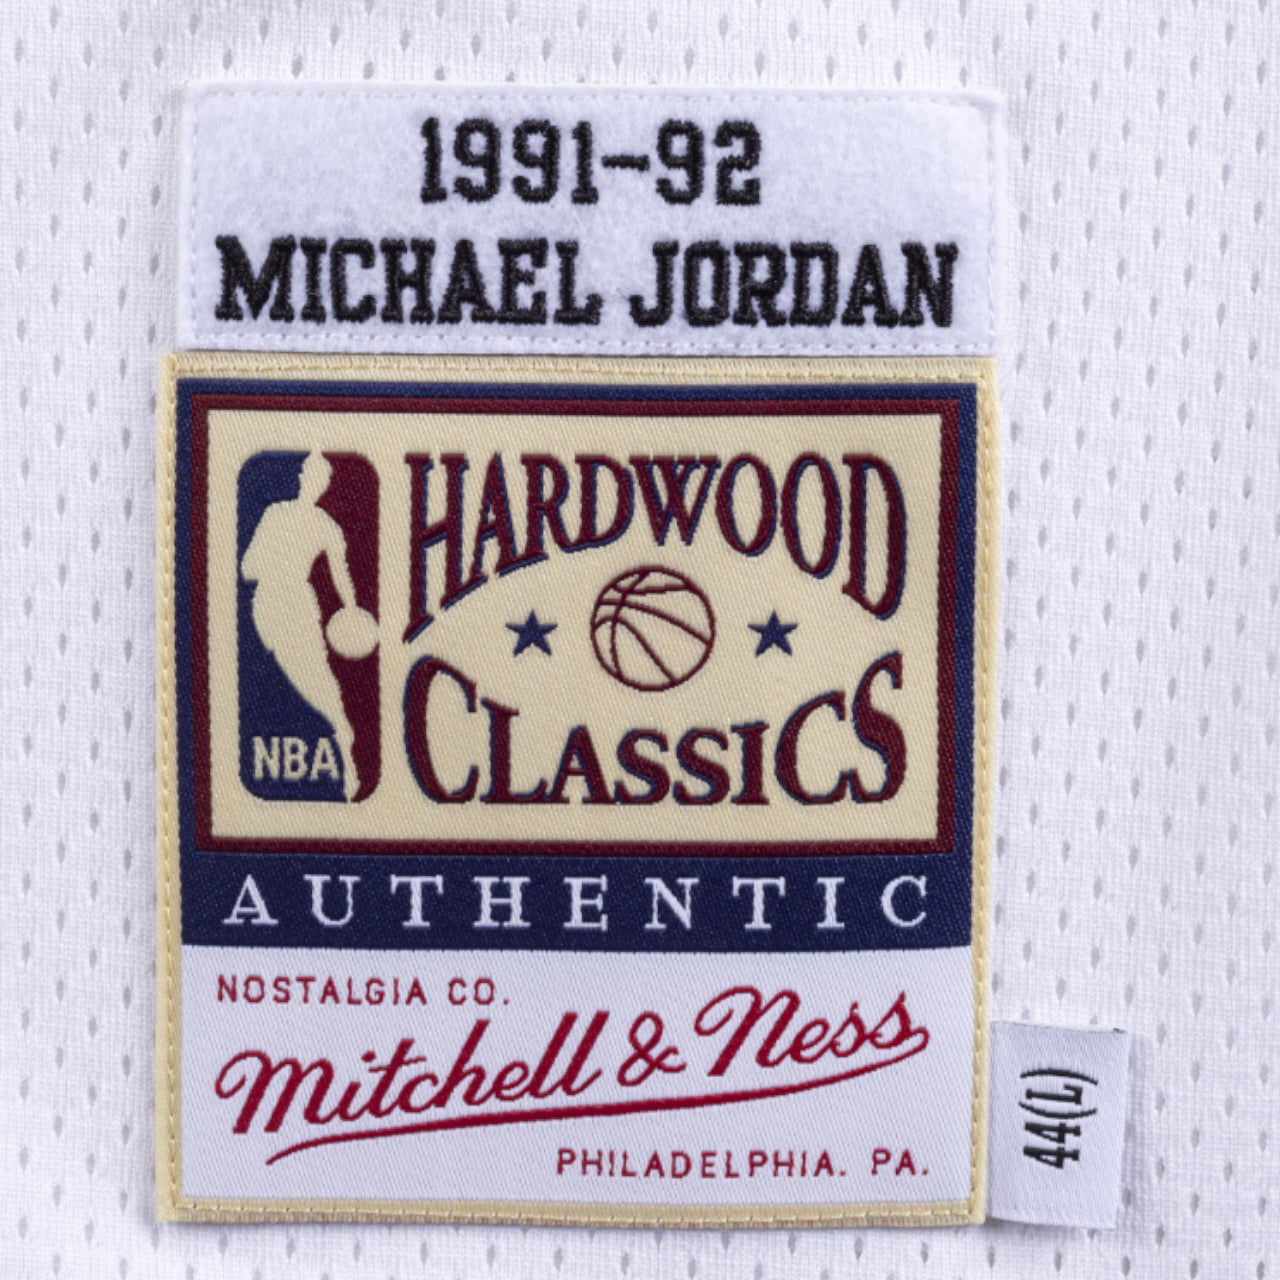 Mitchell & Ness Michael Jordan 91-92 Bulls 23 Home Authentic Jersey - White - Hoop Jersey Store